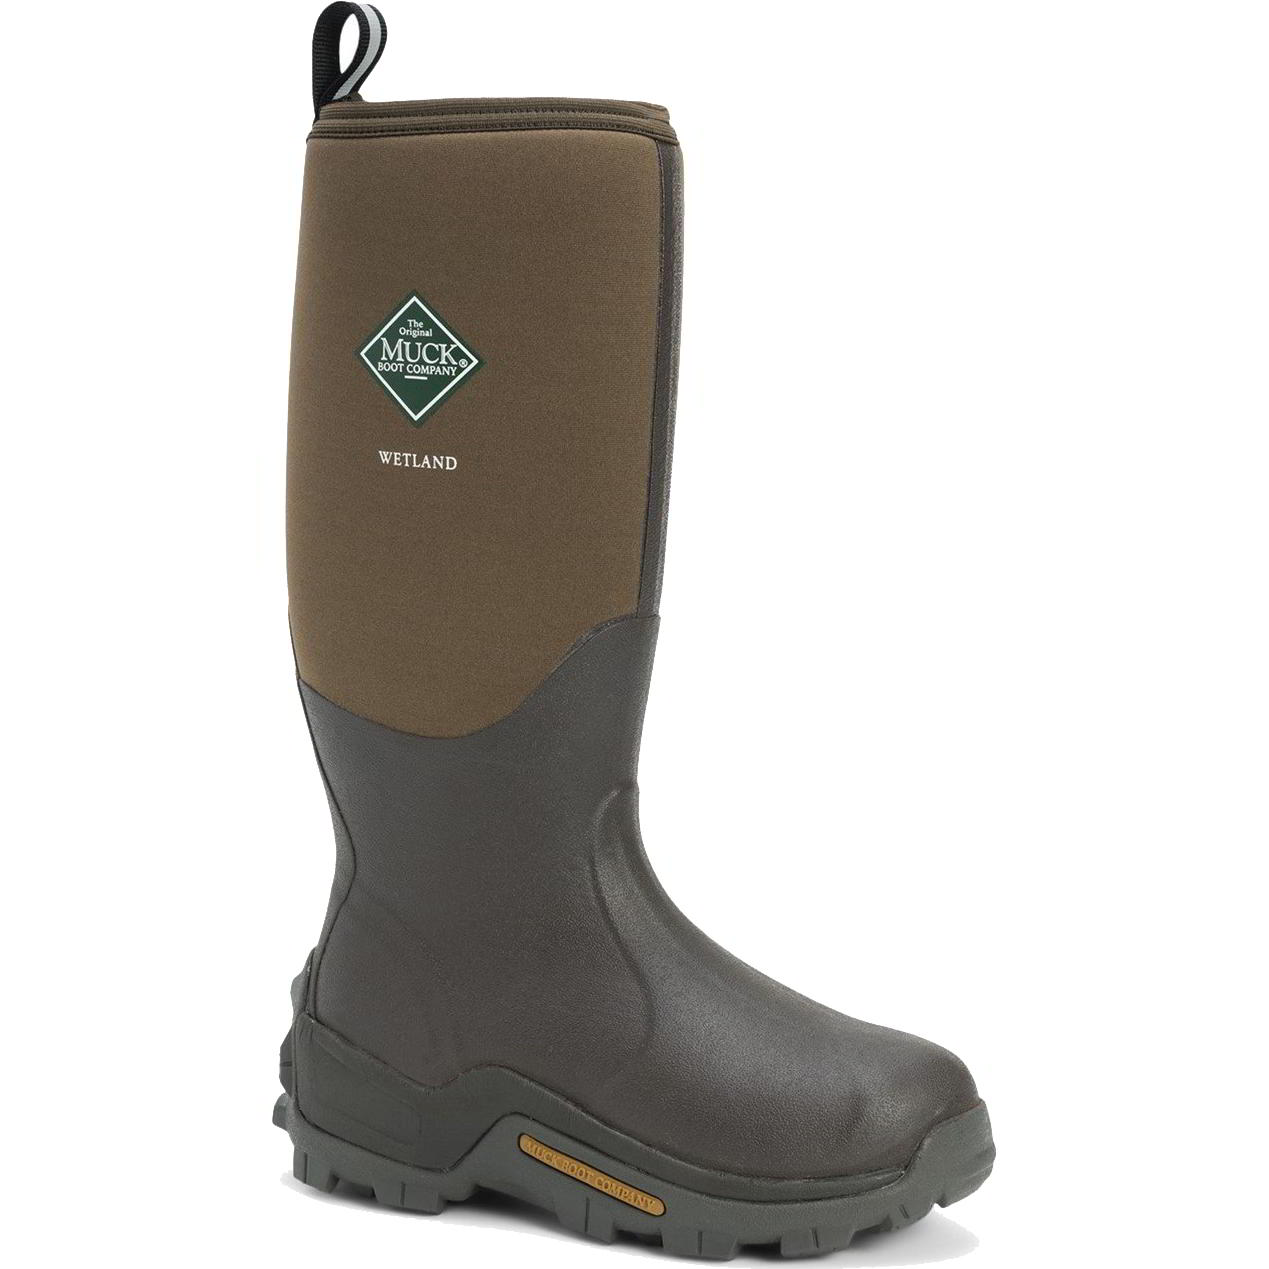 Muck Boots Mens Wellies Wetland Tall Neoprene Wellington - UK 9 Brown 2951